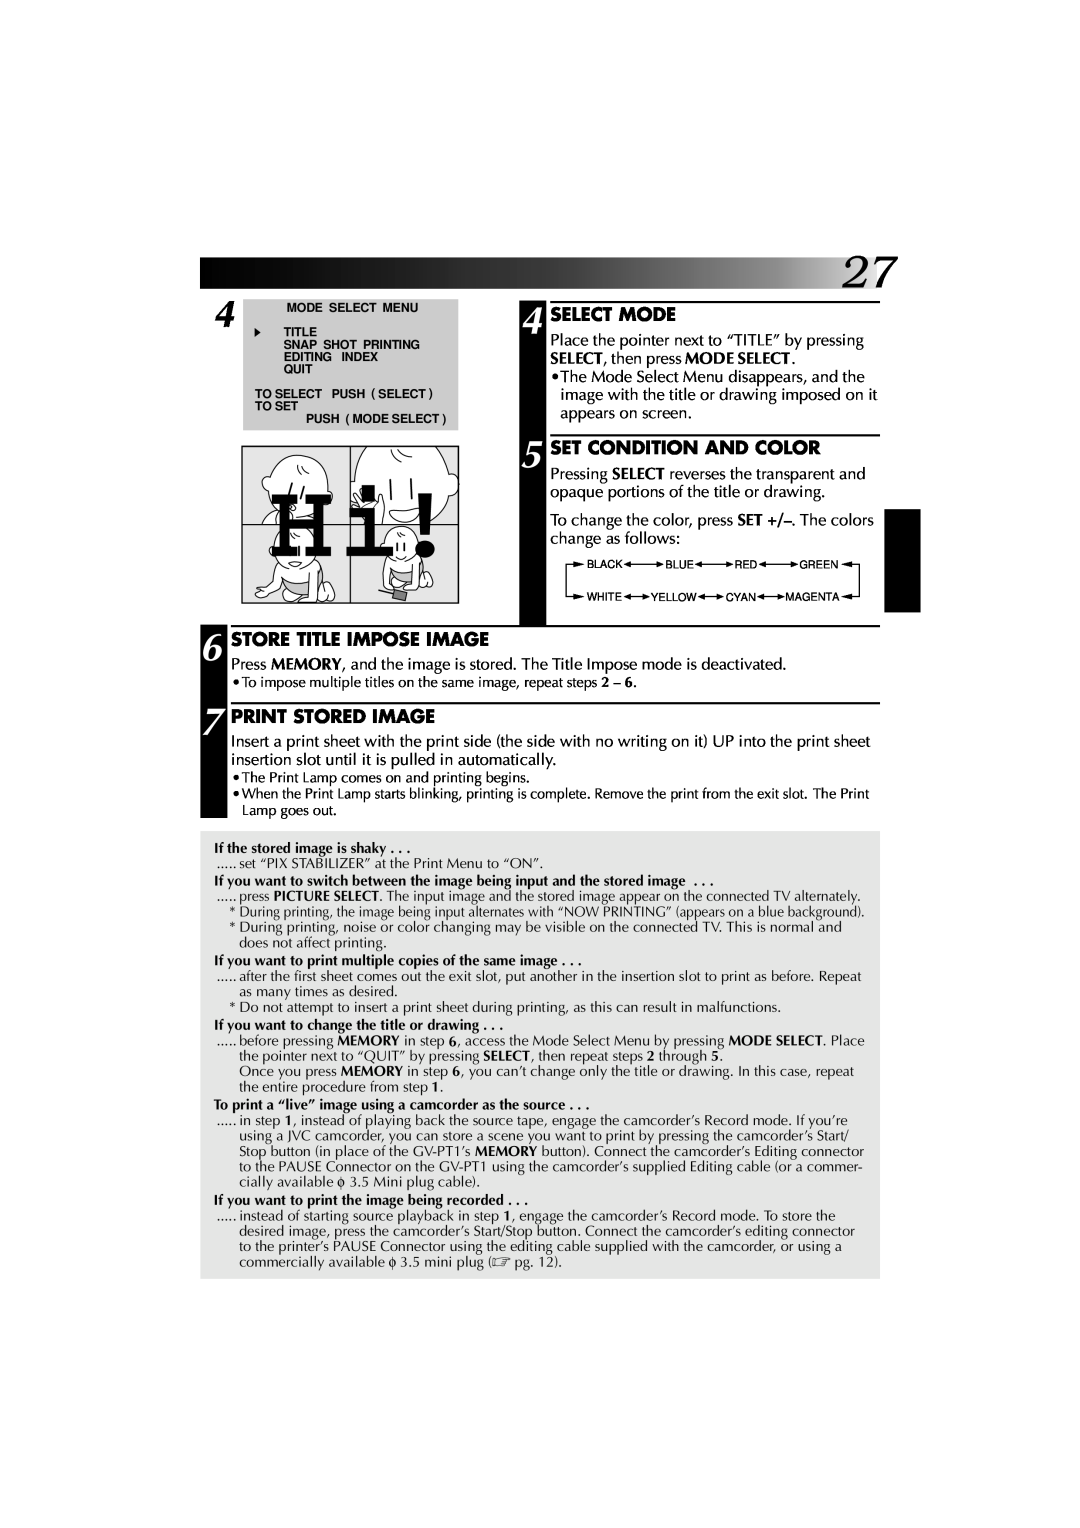 JVC GV-PT1 manual Select Mode, Print Stored Image 